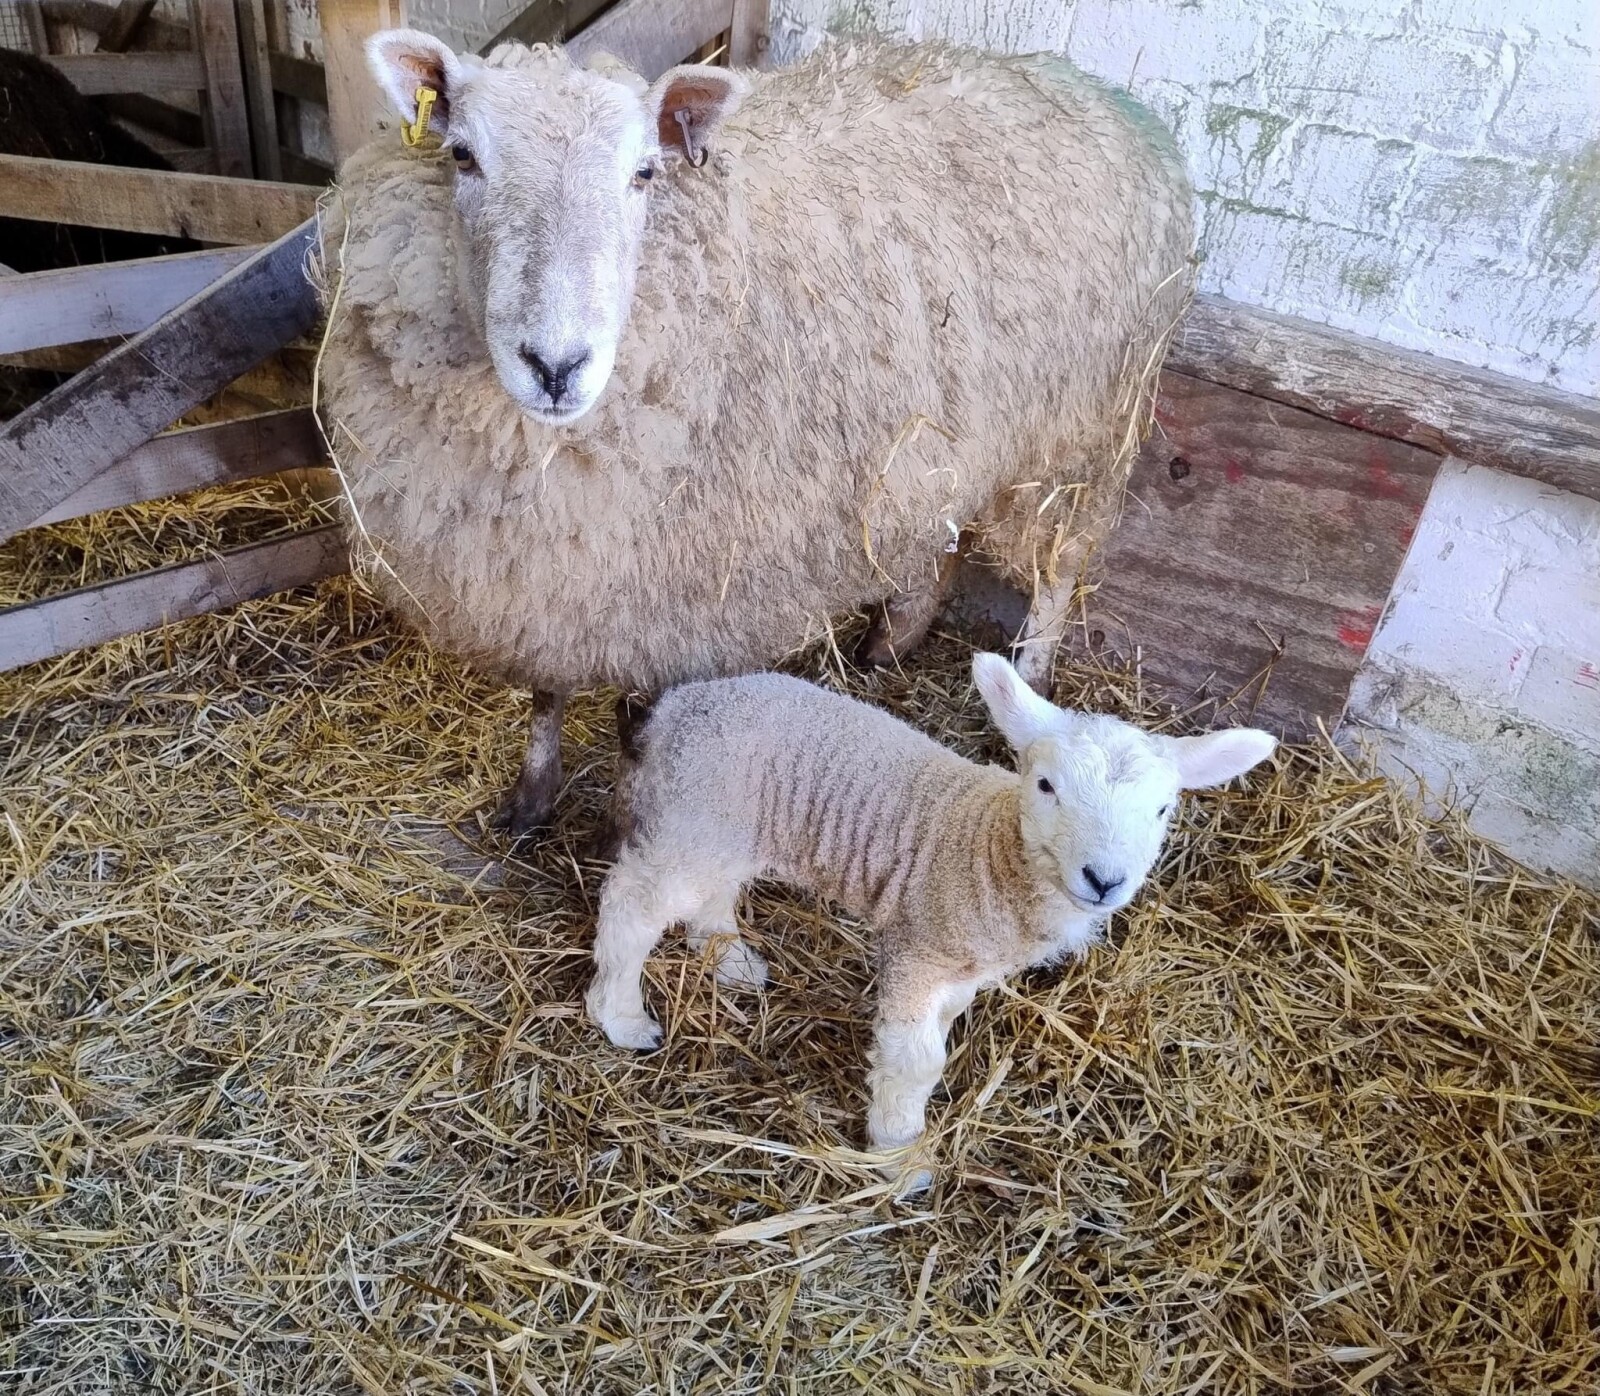 An ewe and her newborn lamb